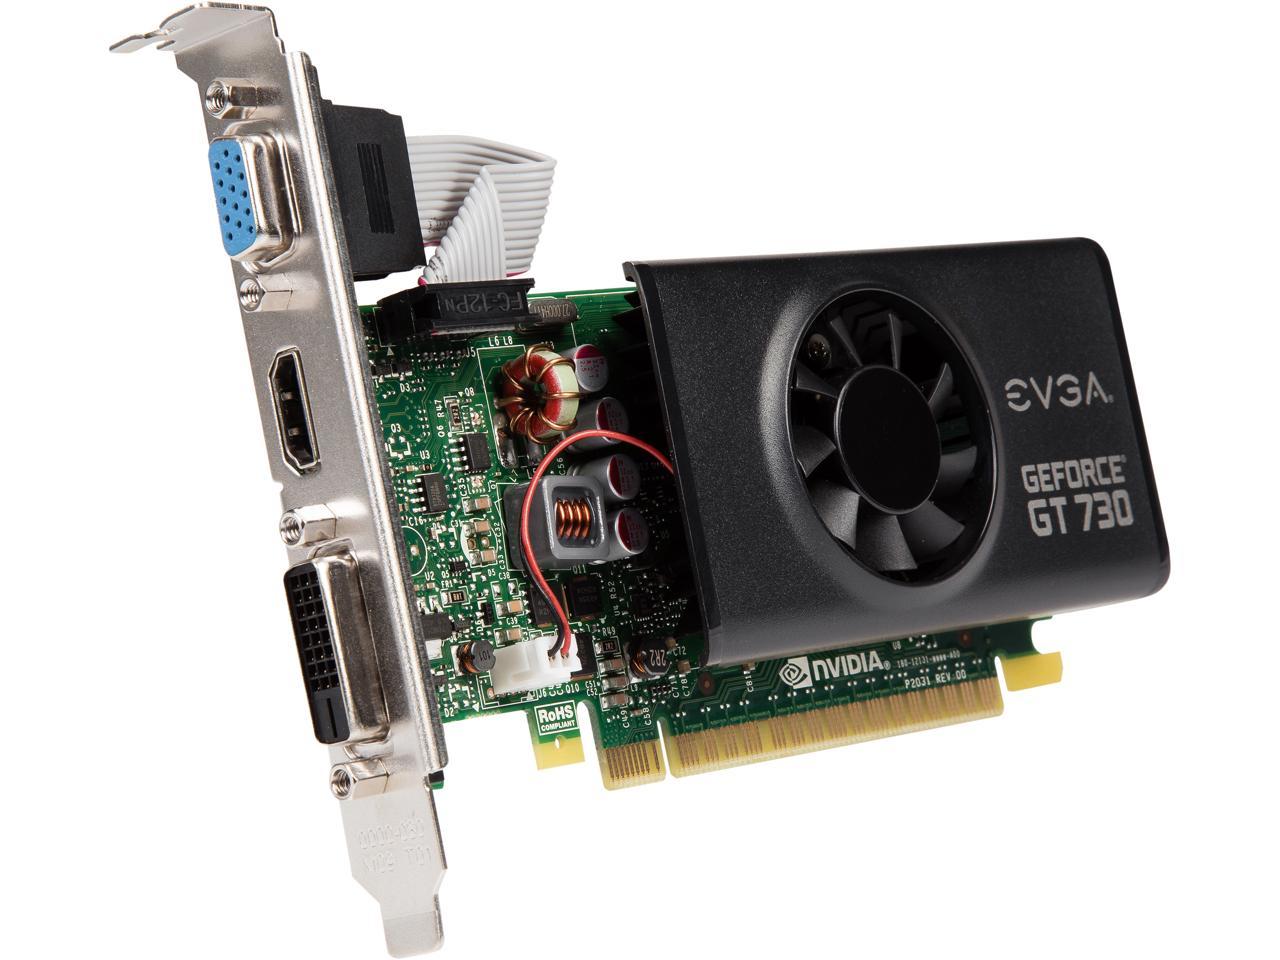 Refurbished: EVGA GeForce GT 730 Video Card 02G-P3-3733-RX - Newegg.com